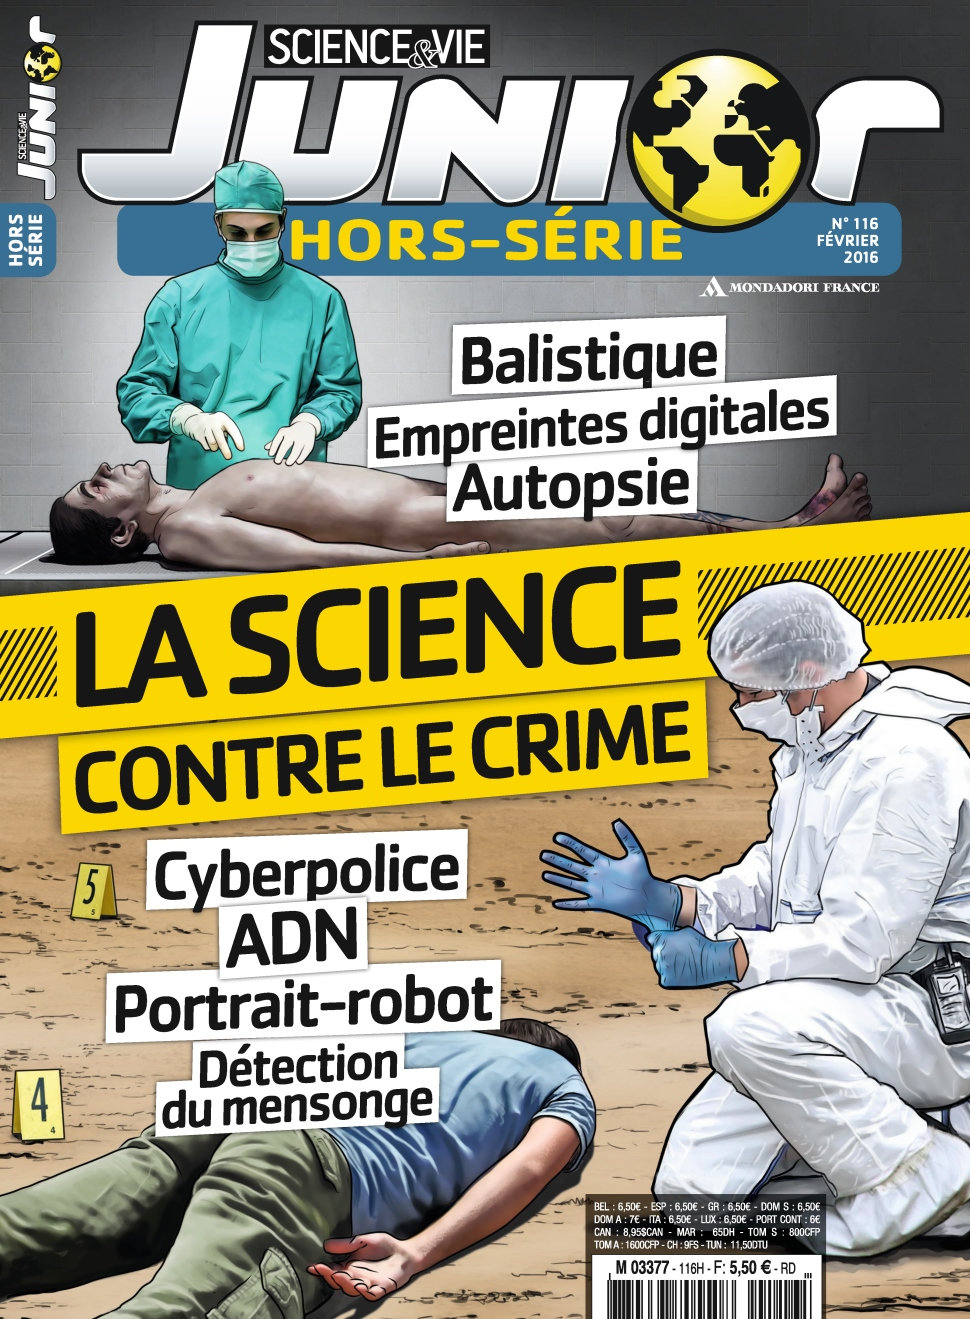 Science & Vie Junior Hors-Série N°116 - Fevrier 2016